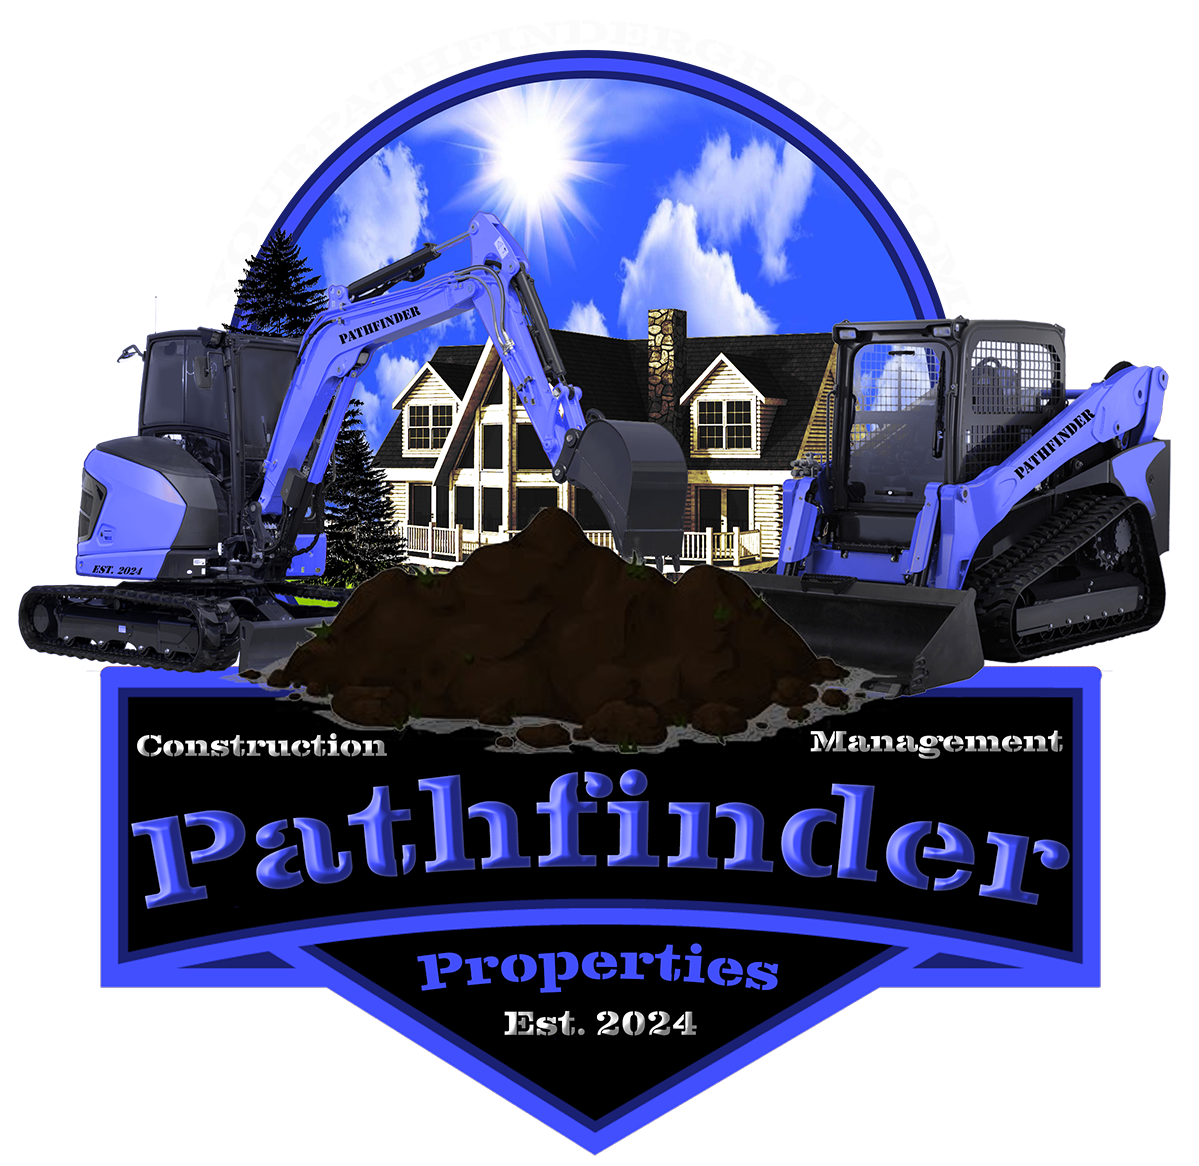 PATHFINDER PROPERTIES LLC